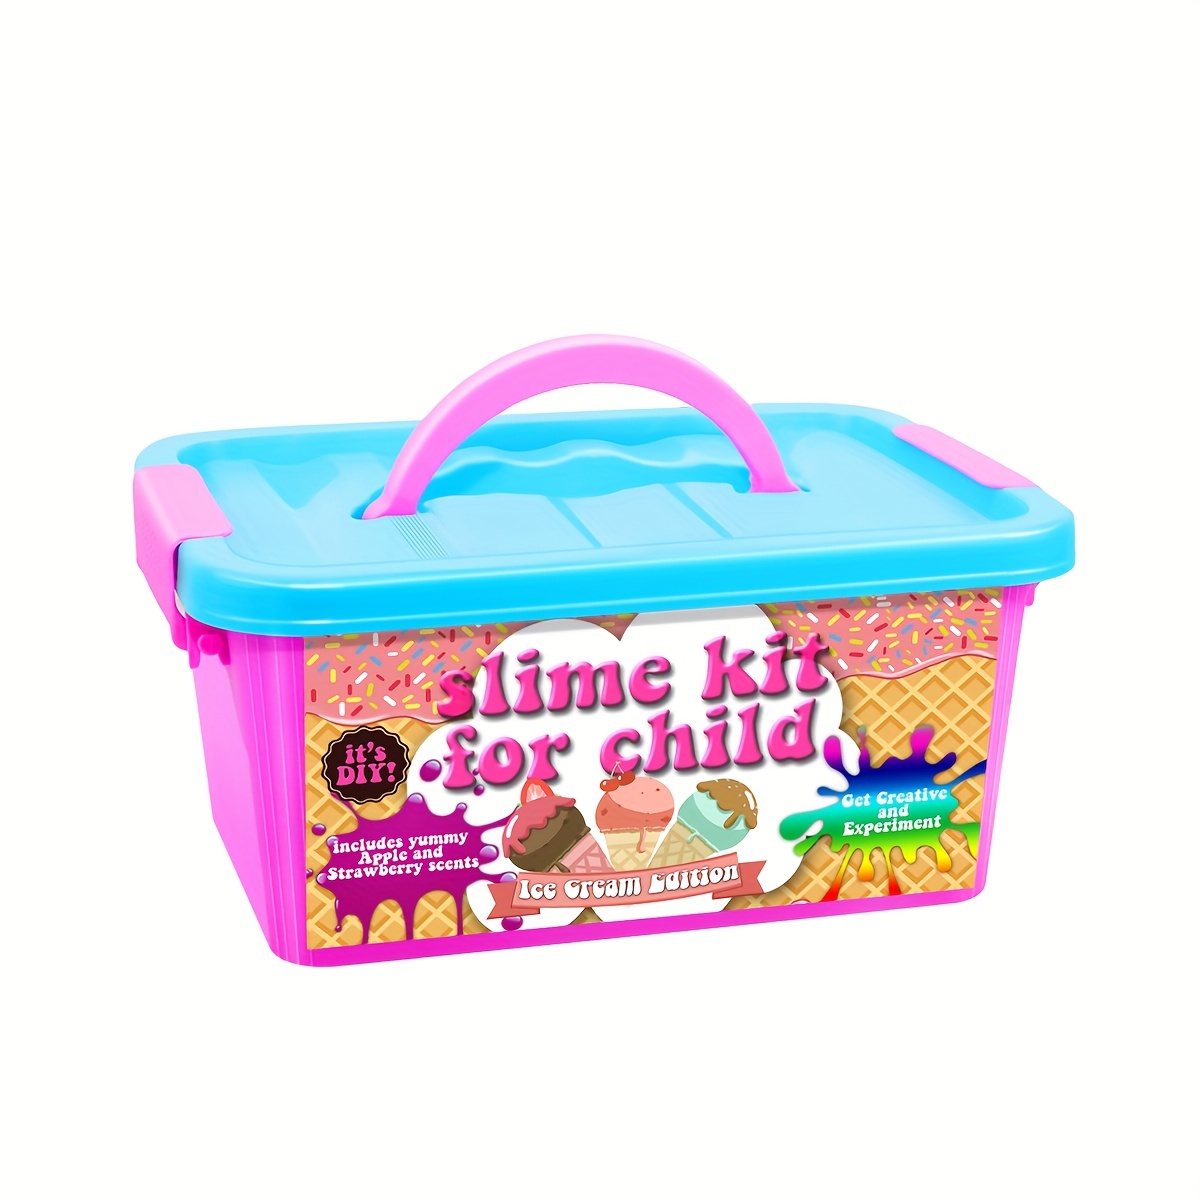 Ice Cream Slime Kit for Girls Ages 8-12 - Ice Cream Party Favors DIY Slime  for Girls, Mini Ice Cream Set Make Your Own Slime Kit for Girls 10-12, Slime  Kit Unde…